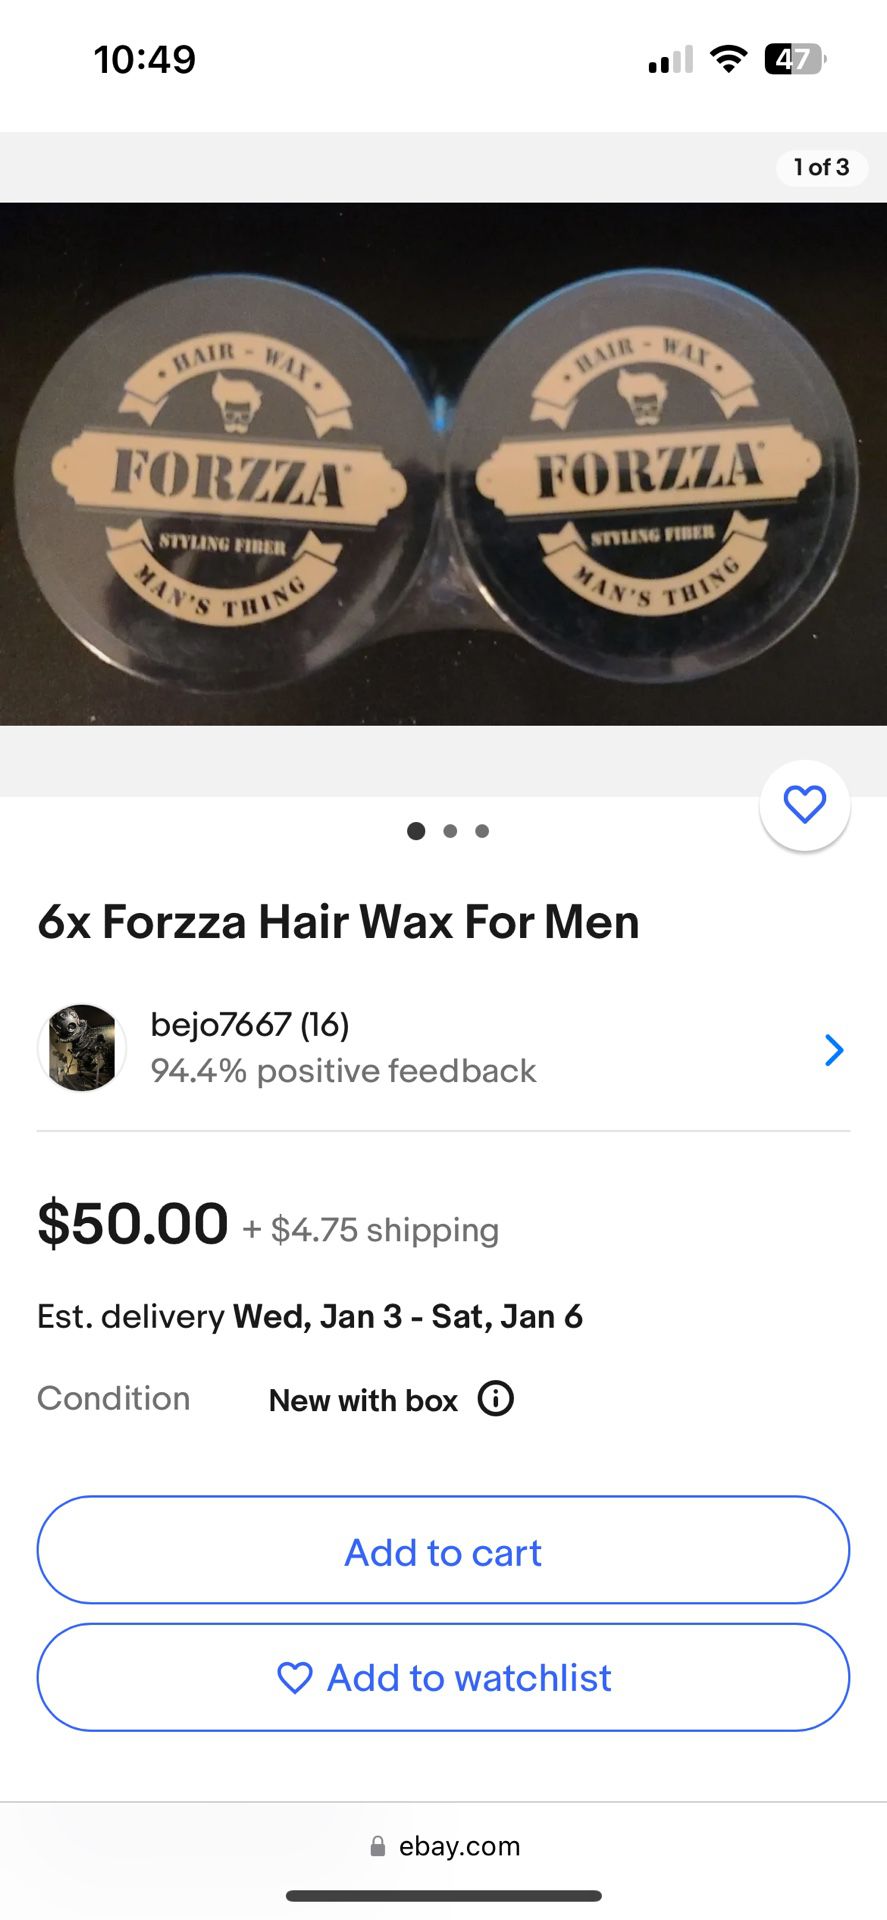 6x Forzza Hair Wax For Men